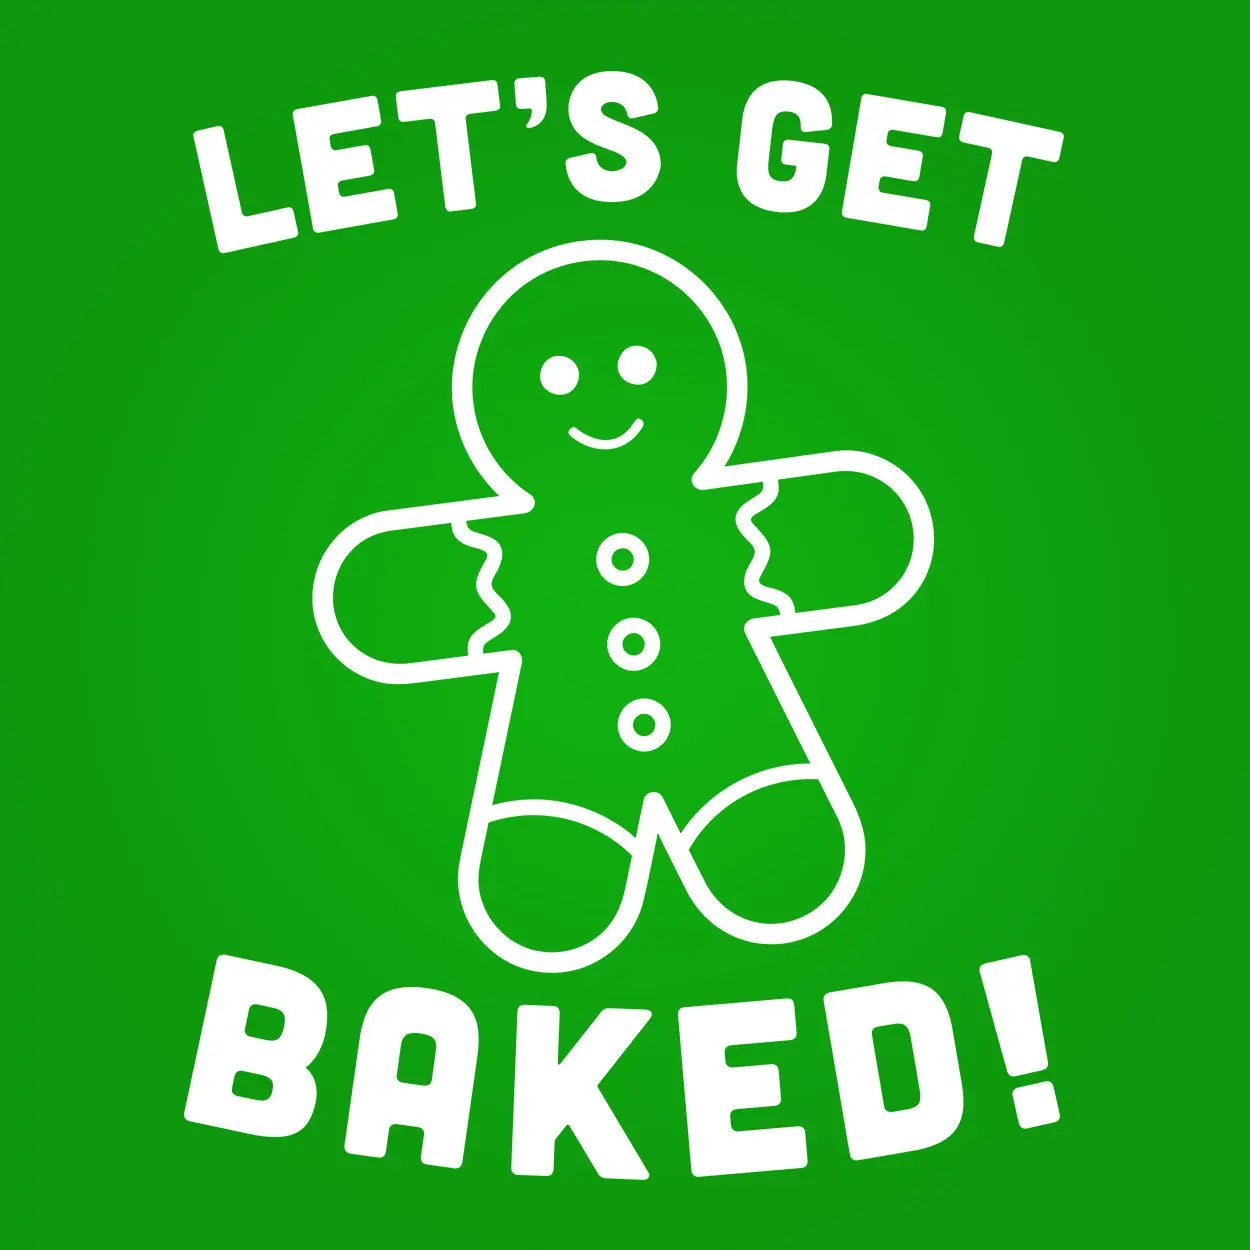 Get Baked Gingerbread Man Tshirt - Donkey Tees